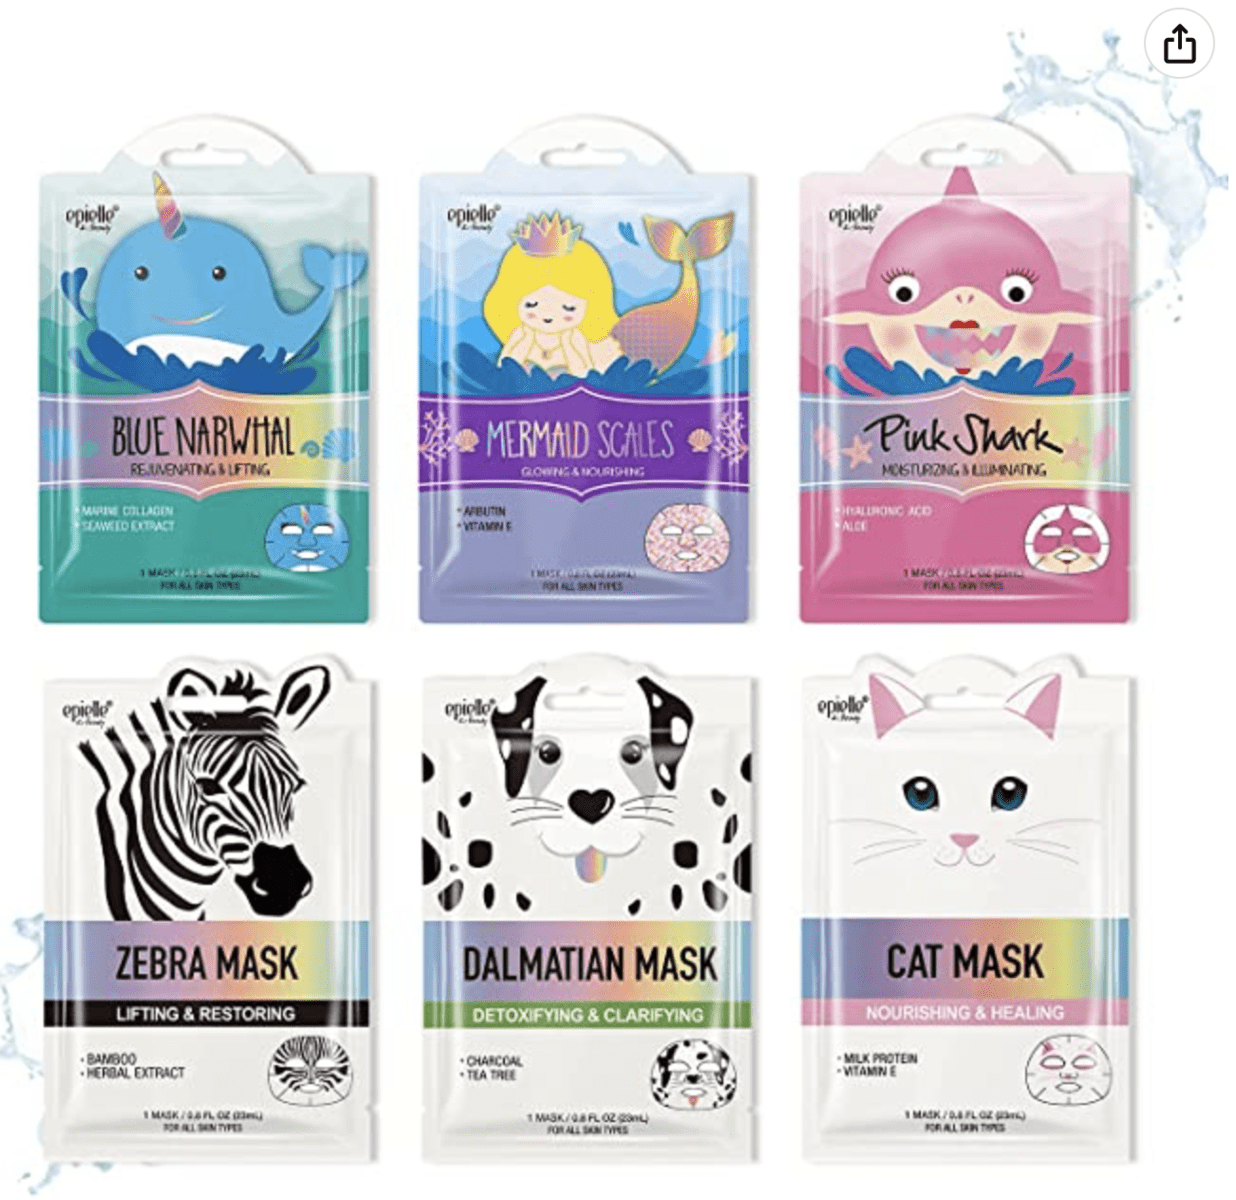 Fun beauty masks for kids